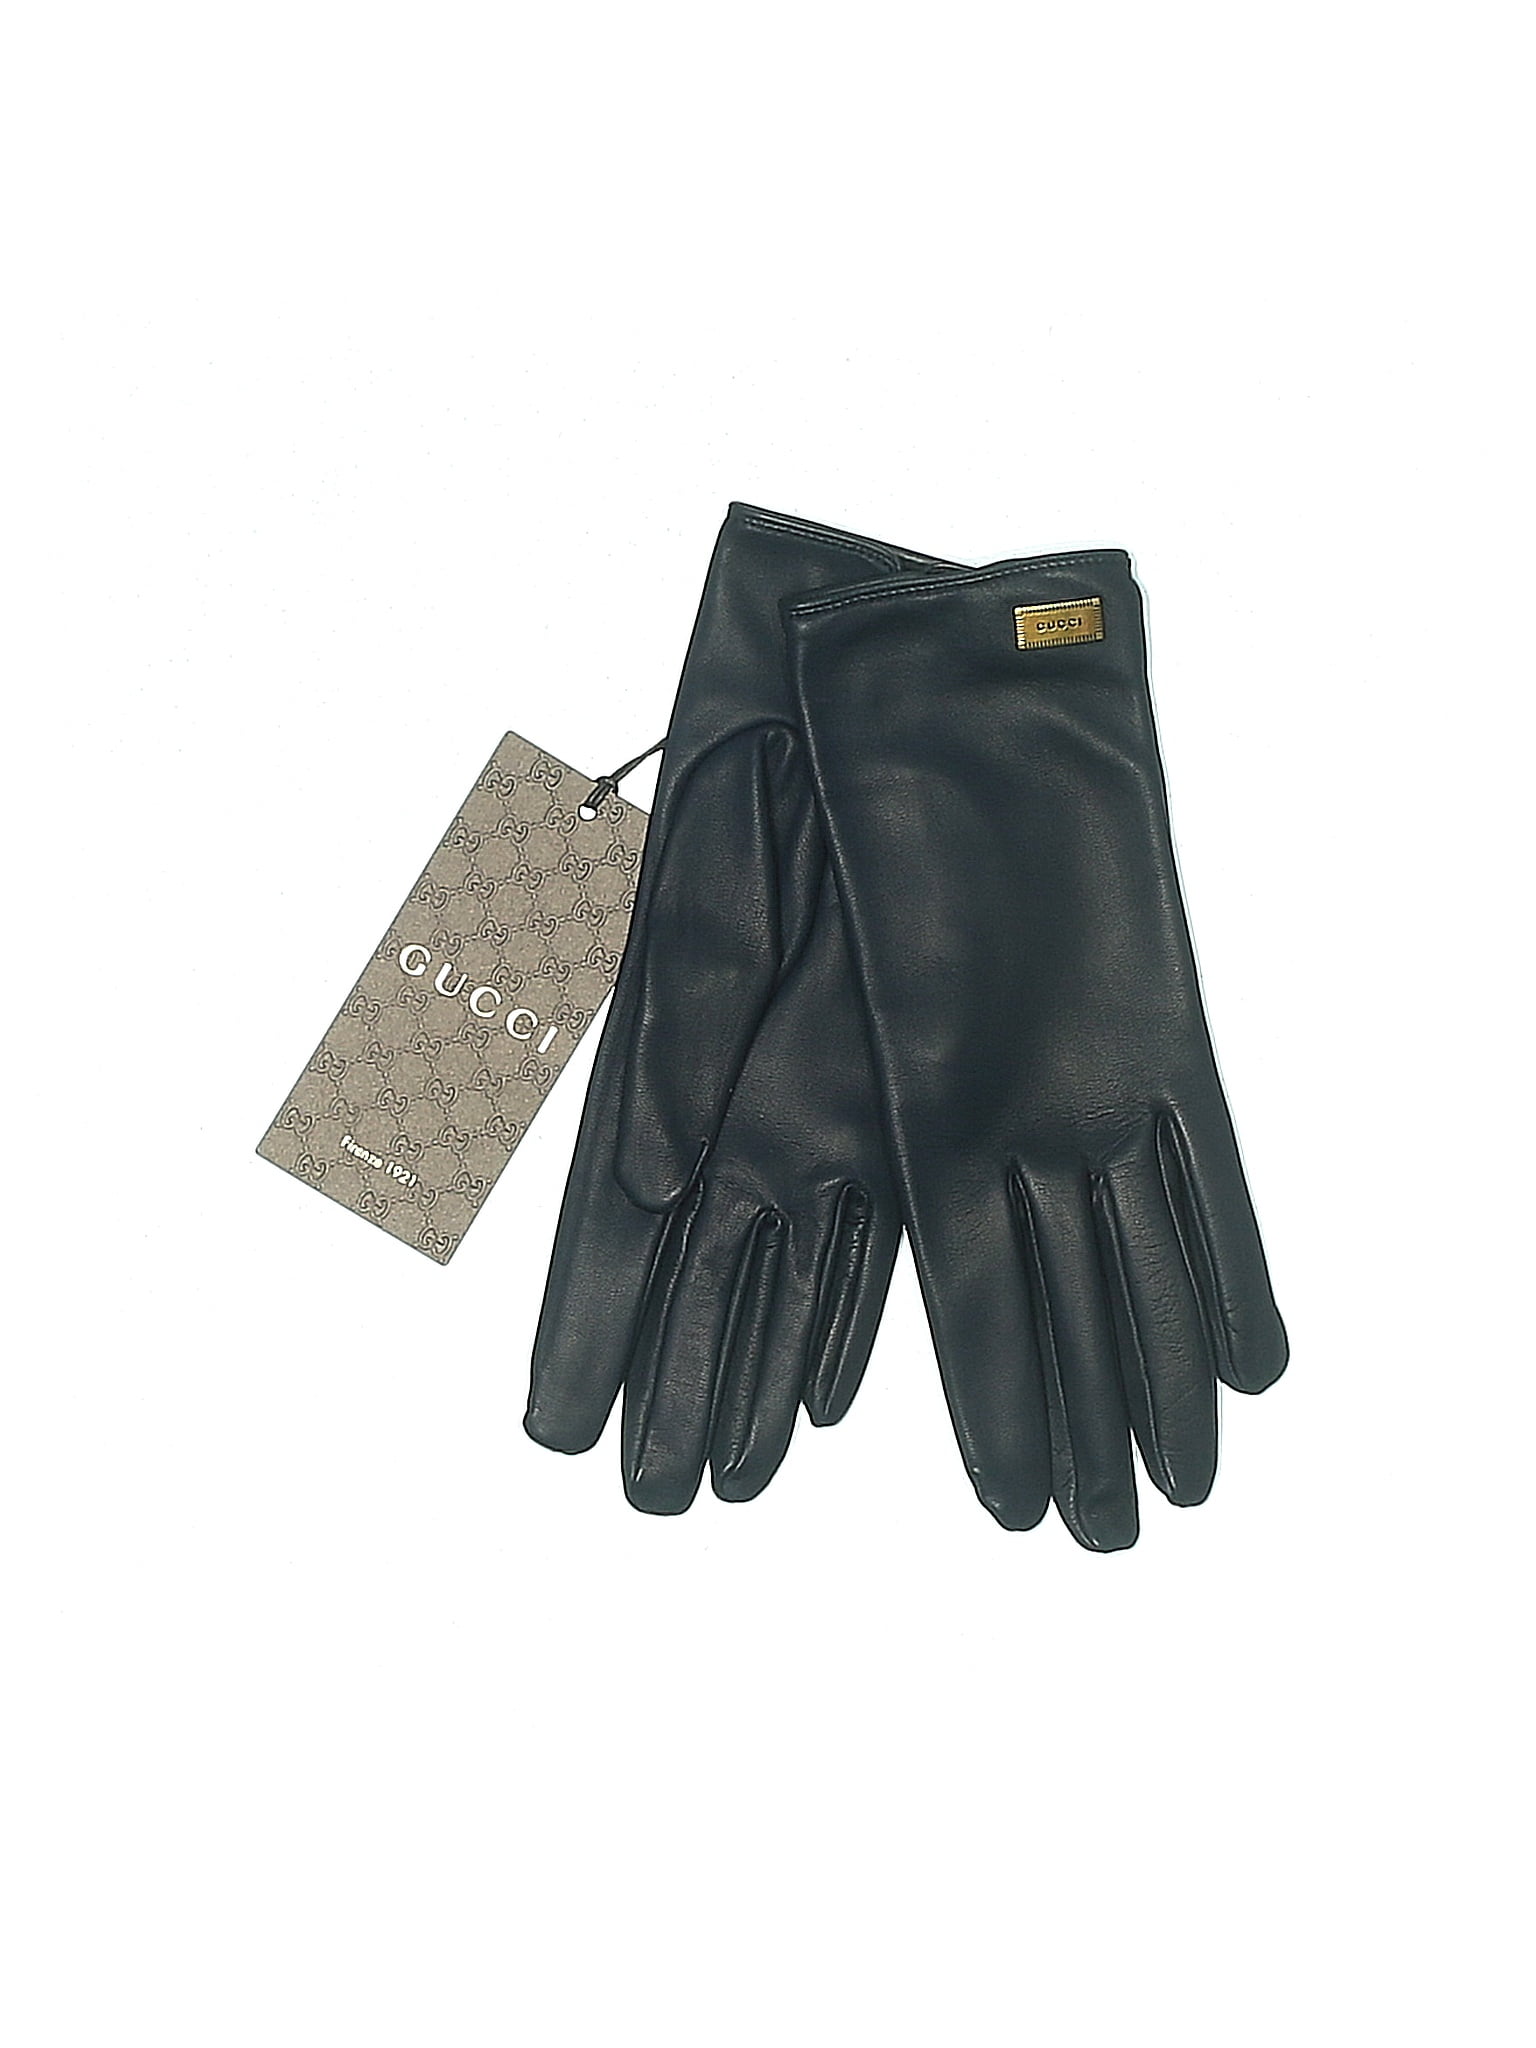 Gucci 100% Leather Solid Black Blue Gloves Size Med (7.5) - 42% off ...